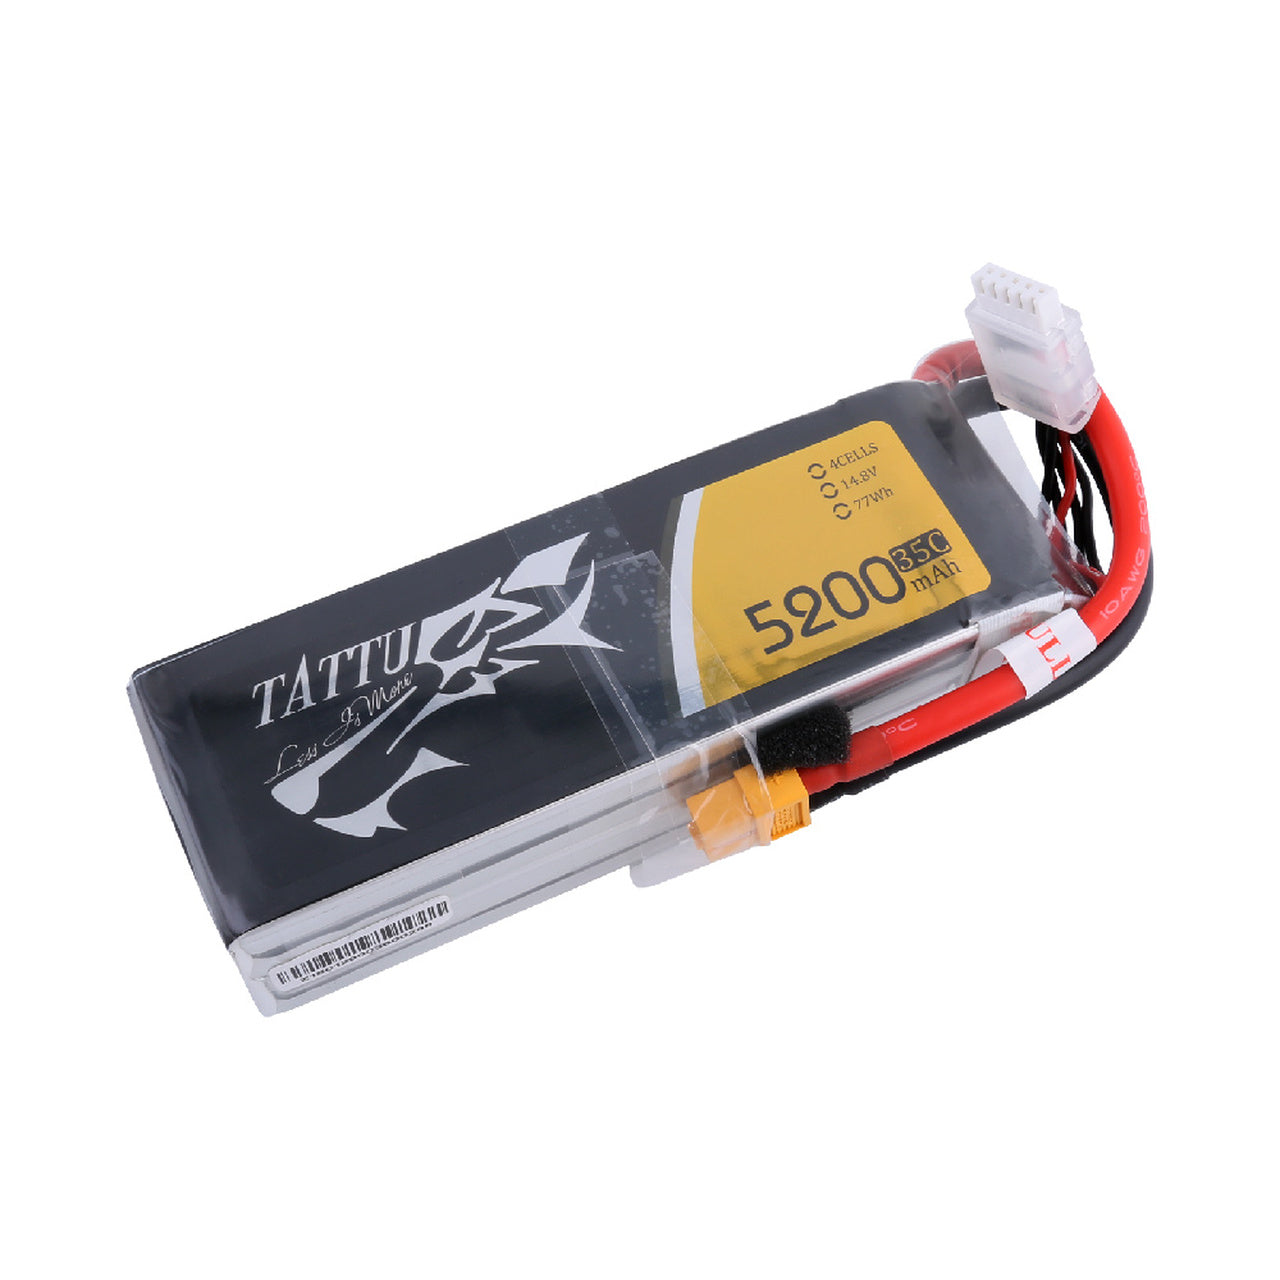 Tattu 5200mAh 14.8V 35C 4S1P Lipo Battery Pack with XT60 Plug - DroneLabs.ca